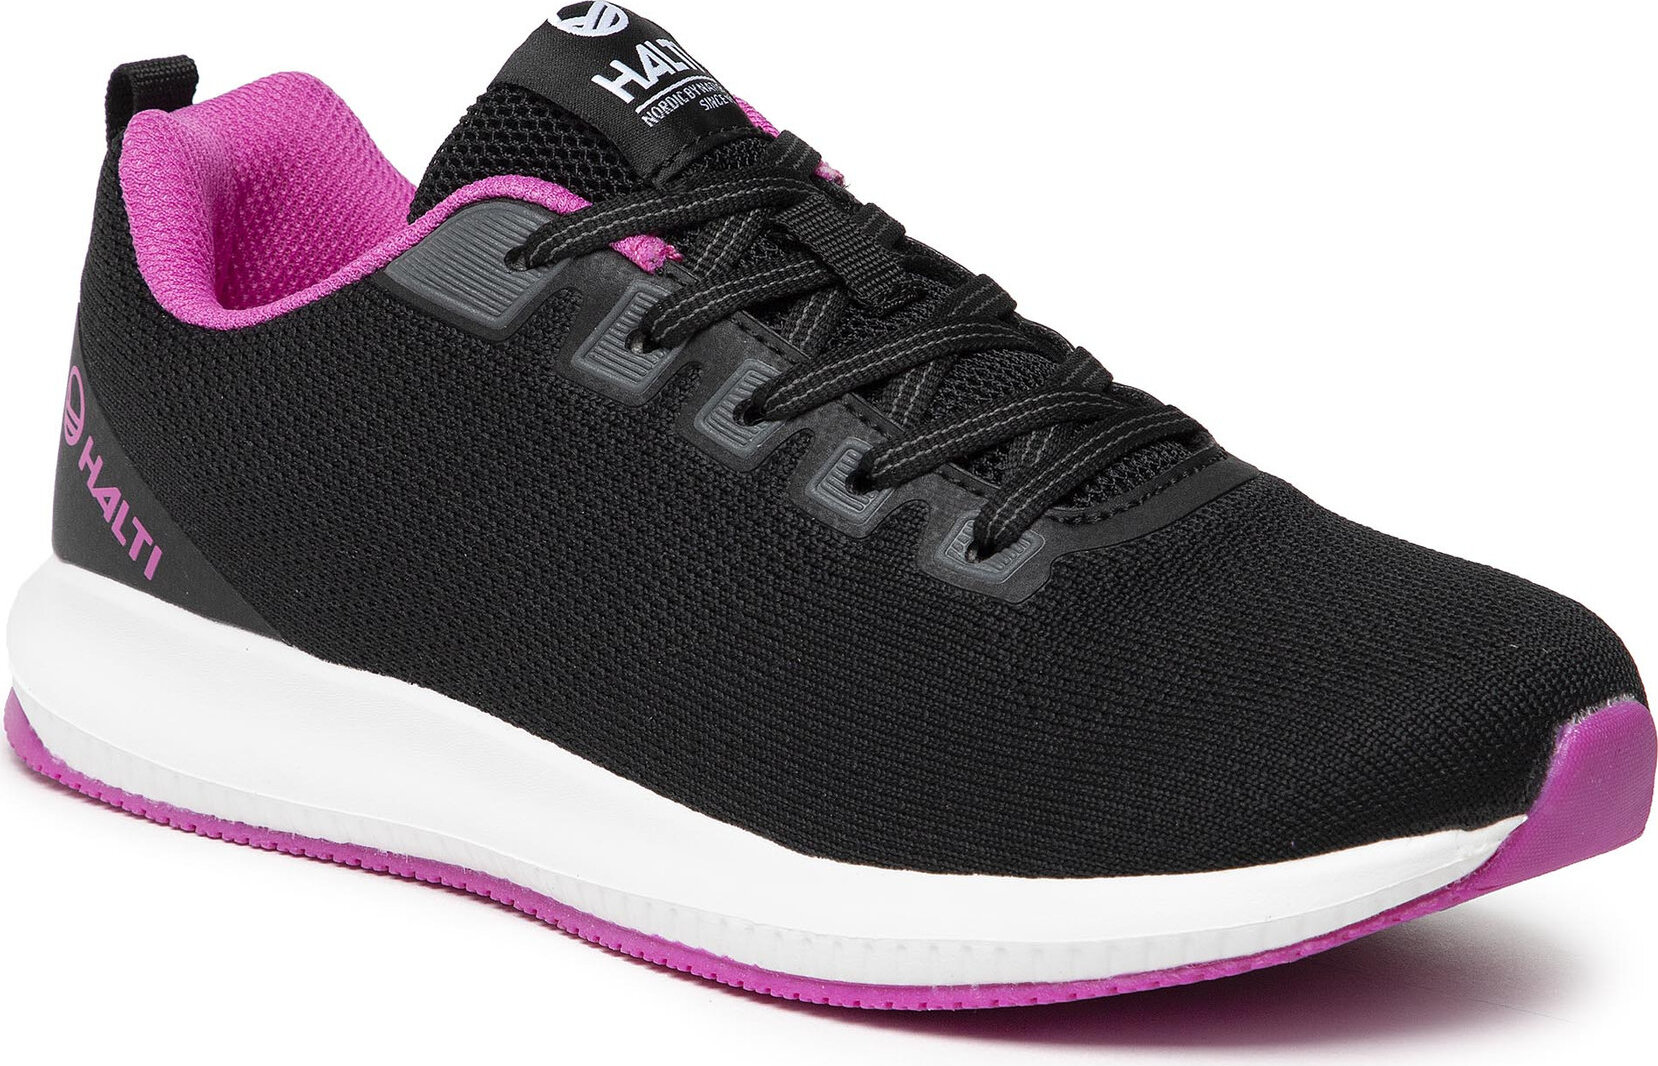 Sneakersy Halti Pace W Sneaker 054-2765 Black/Teaberry P9963